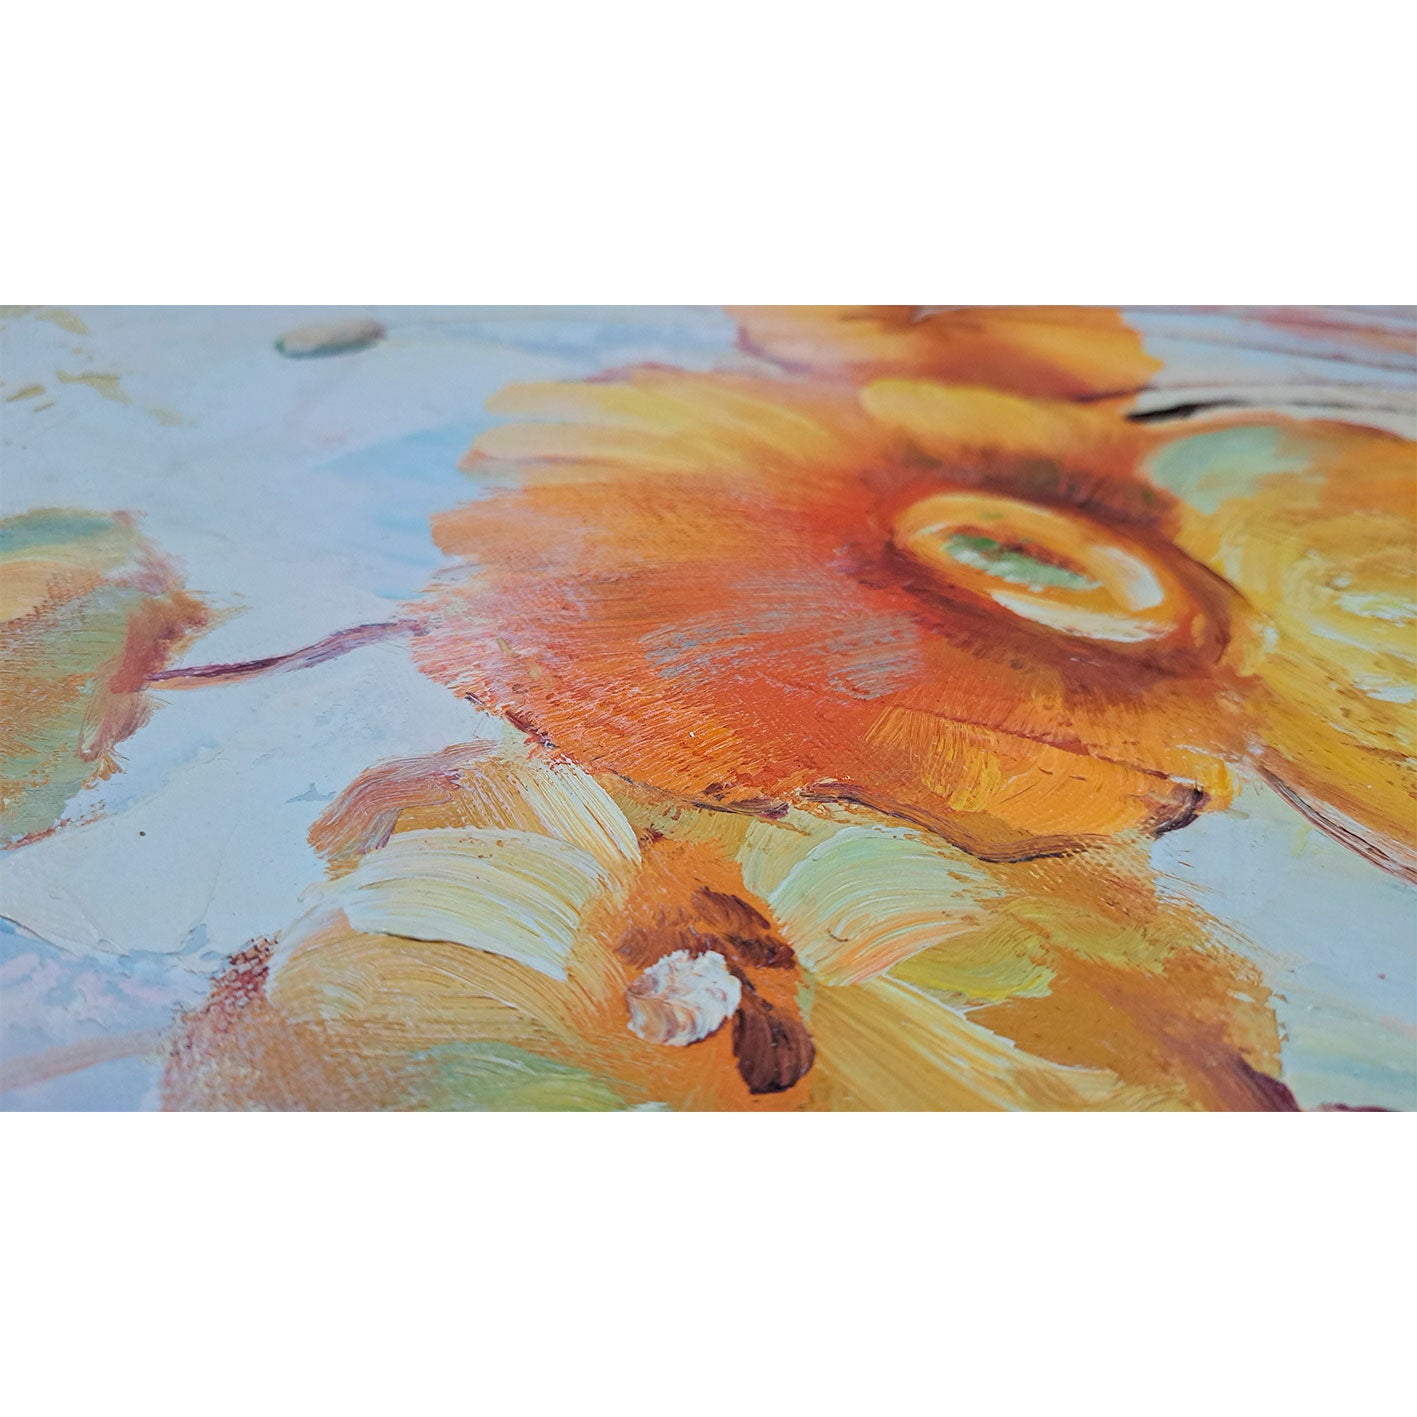 Color Flower II Painting 60x50 cm